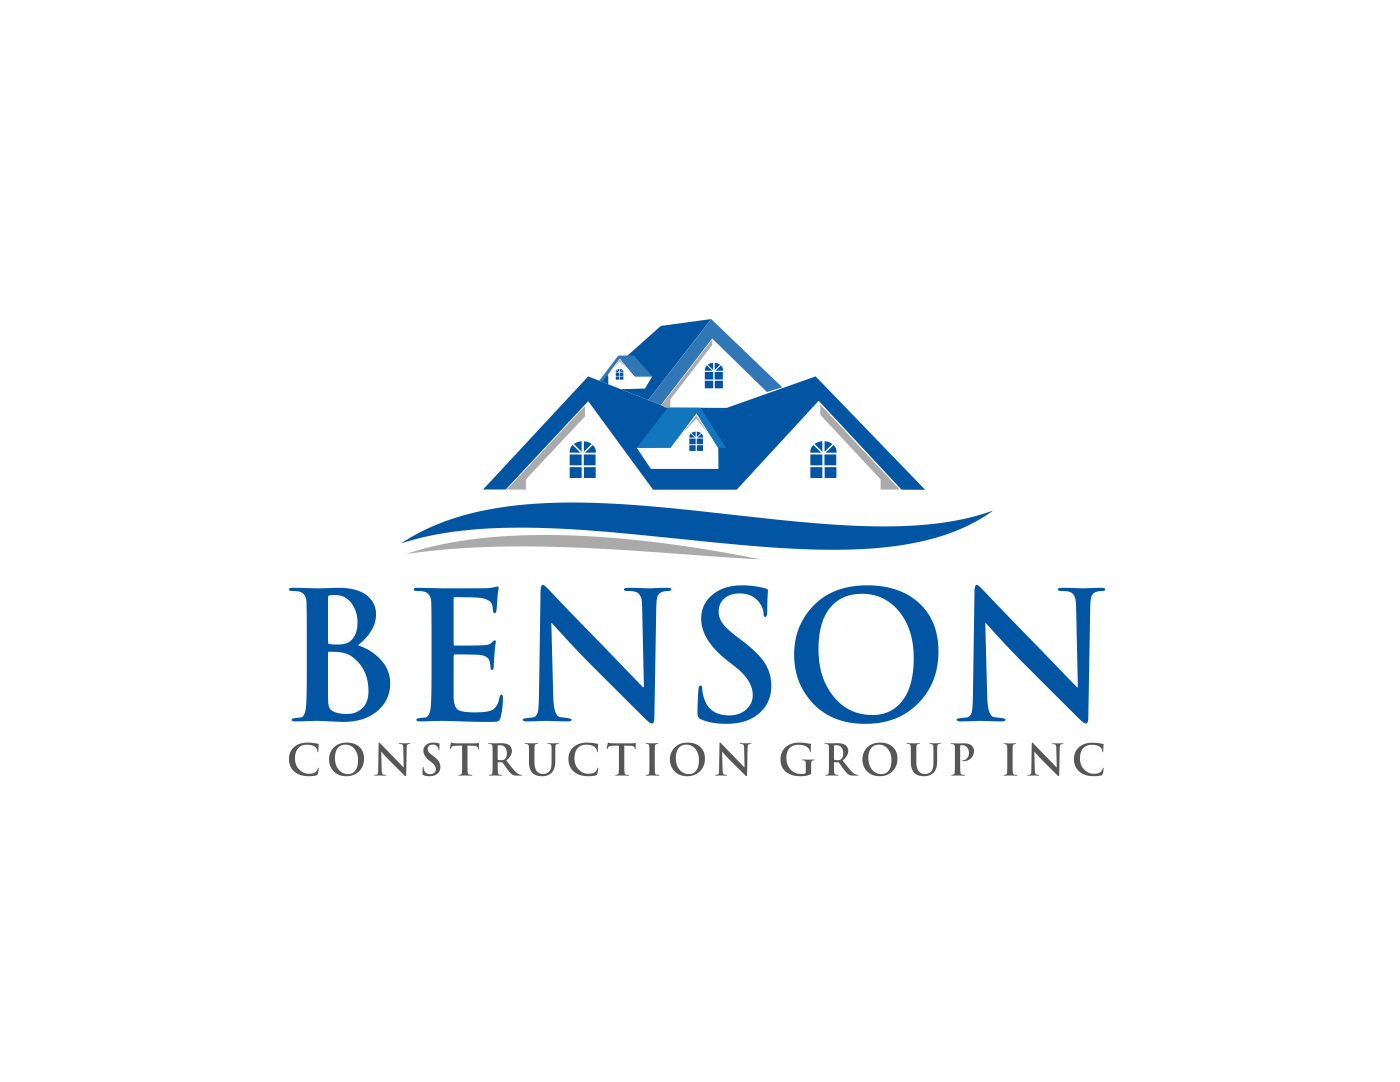 Benson Logo - Professional, Upmarket, Construction Company Logo Design for Benson ...